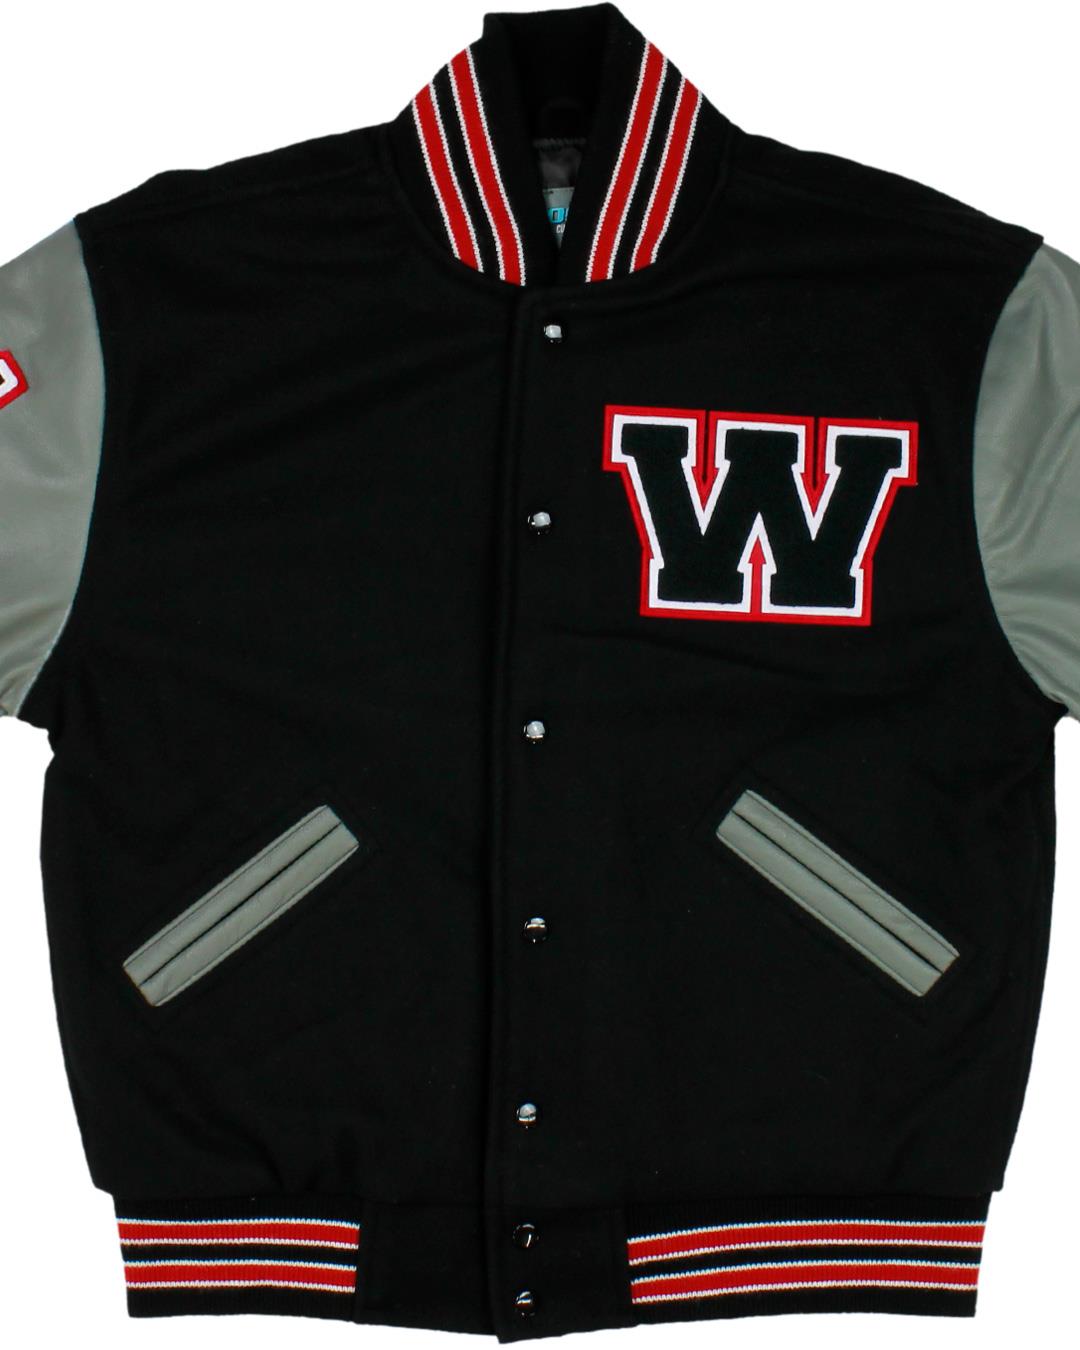 Weir High School Letterman Jacket, Weirton WV - Front